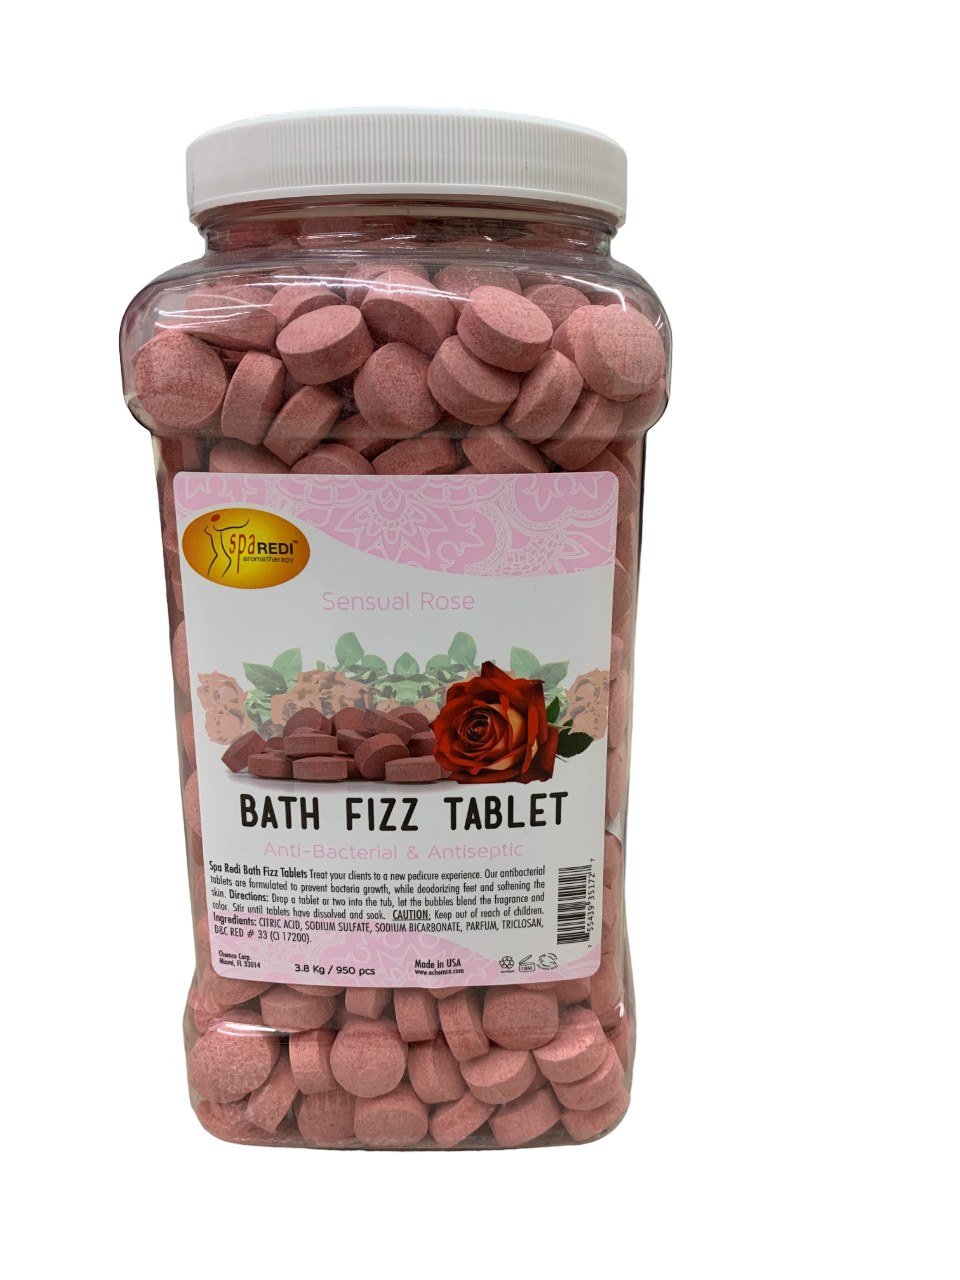 SpaRedi Bath Fizz Tablet Sensual Rose